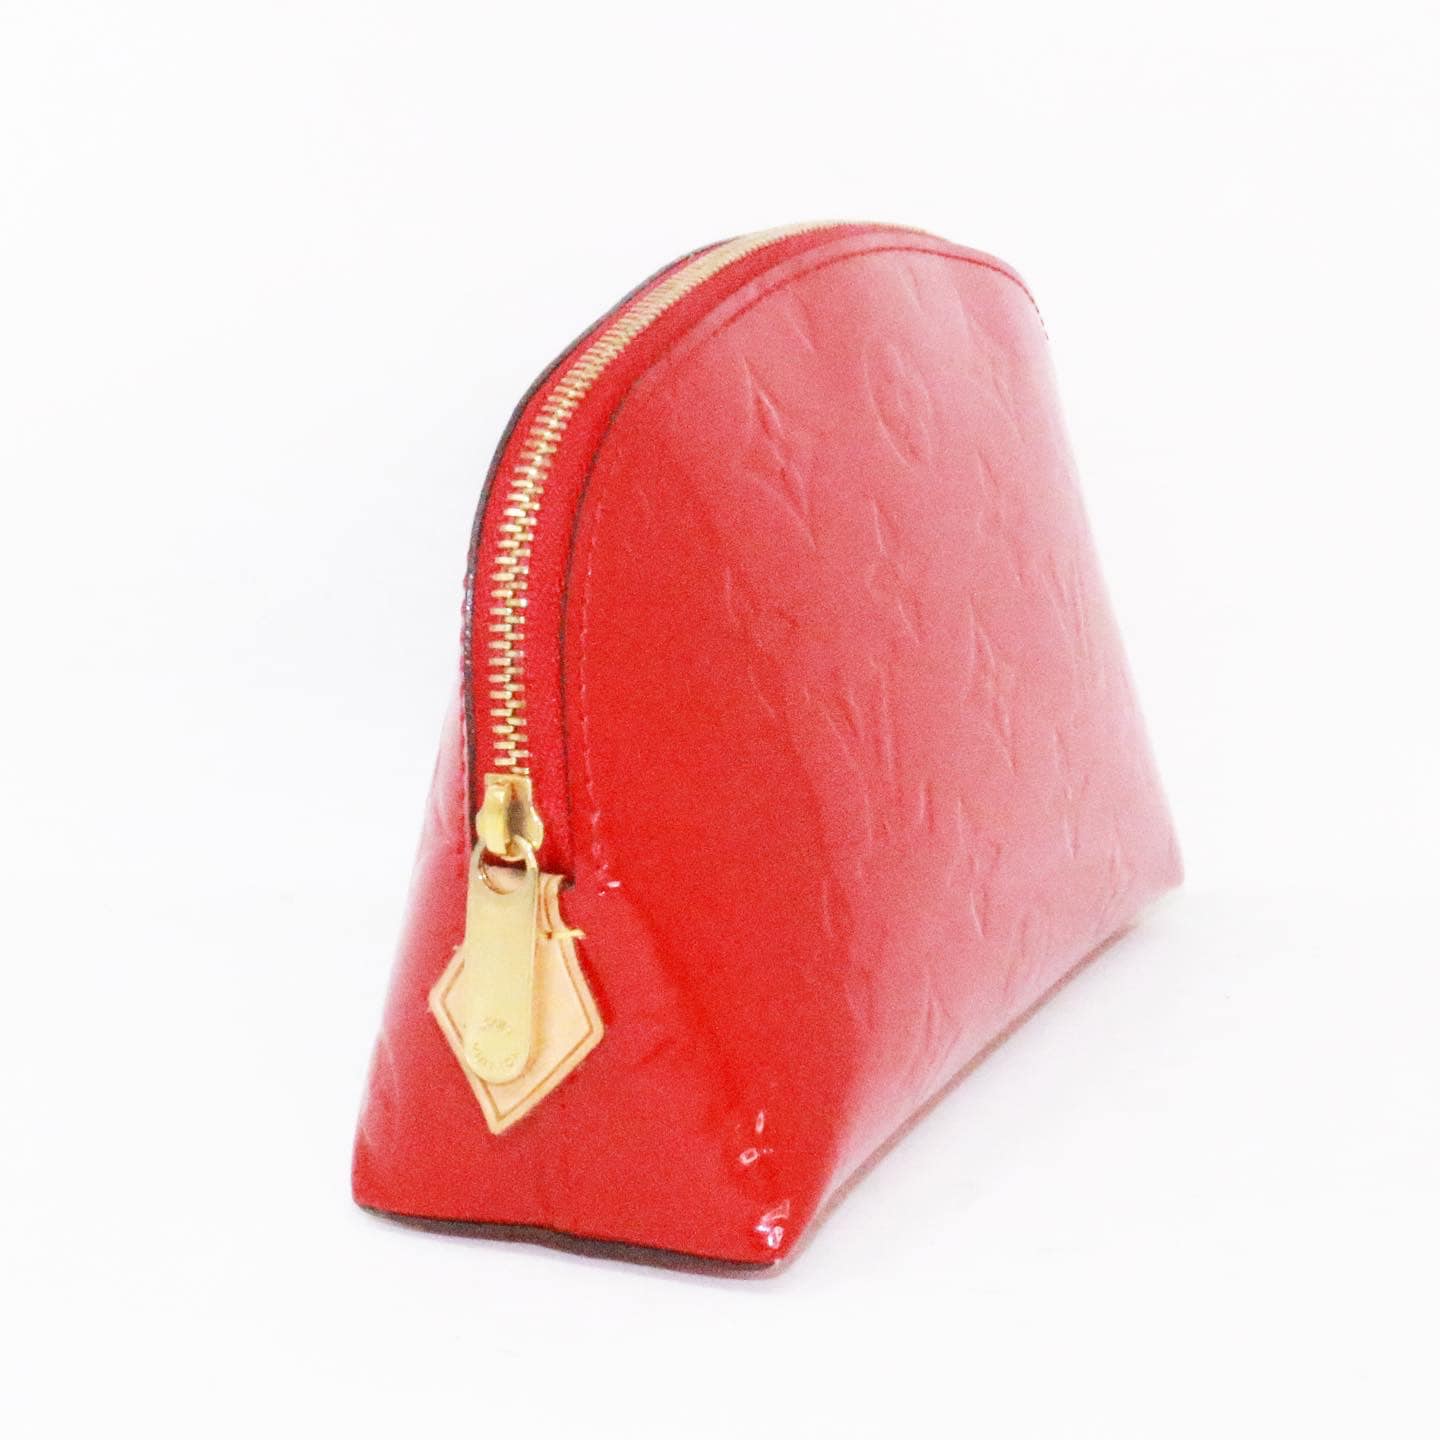 louis vuitton wallet for women red